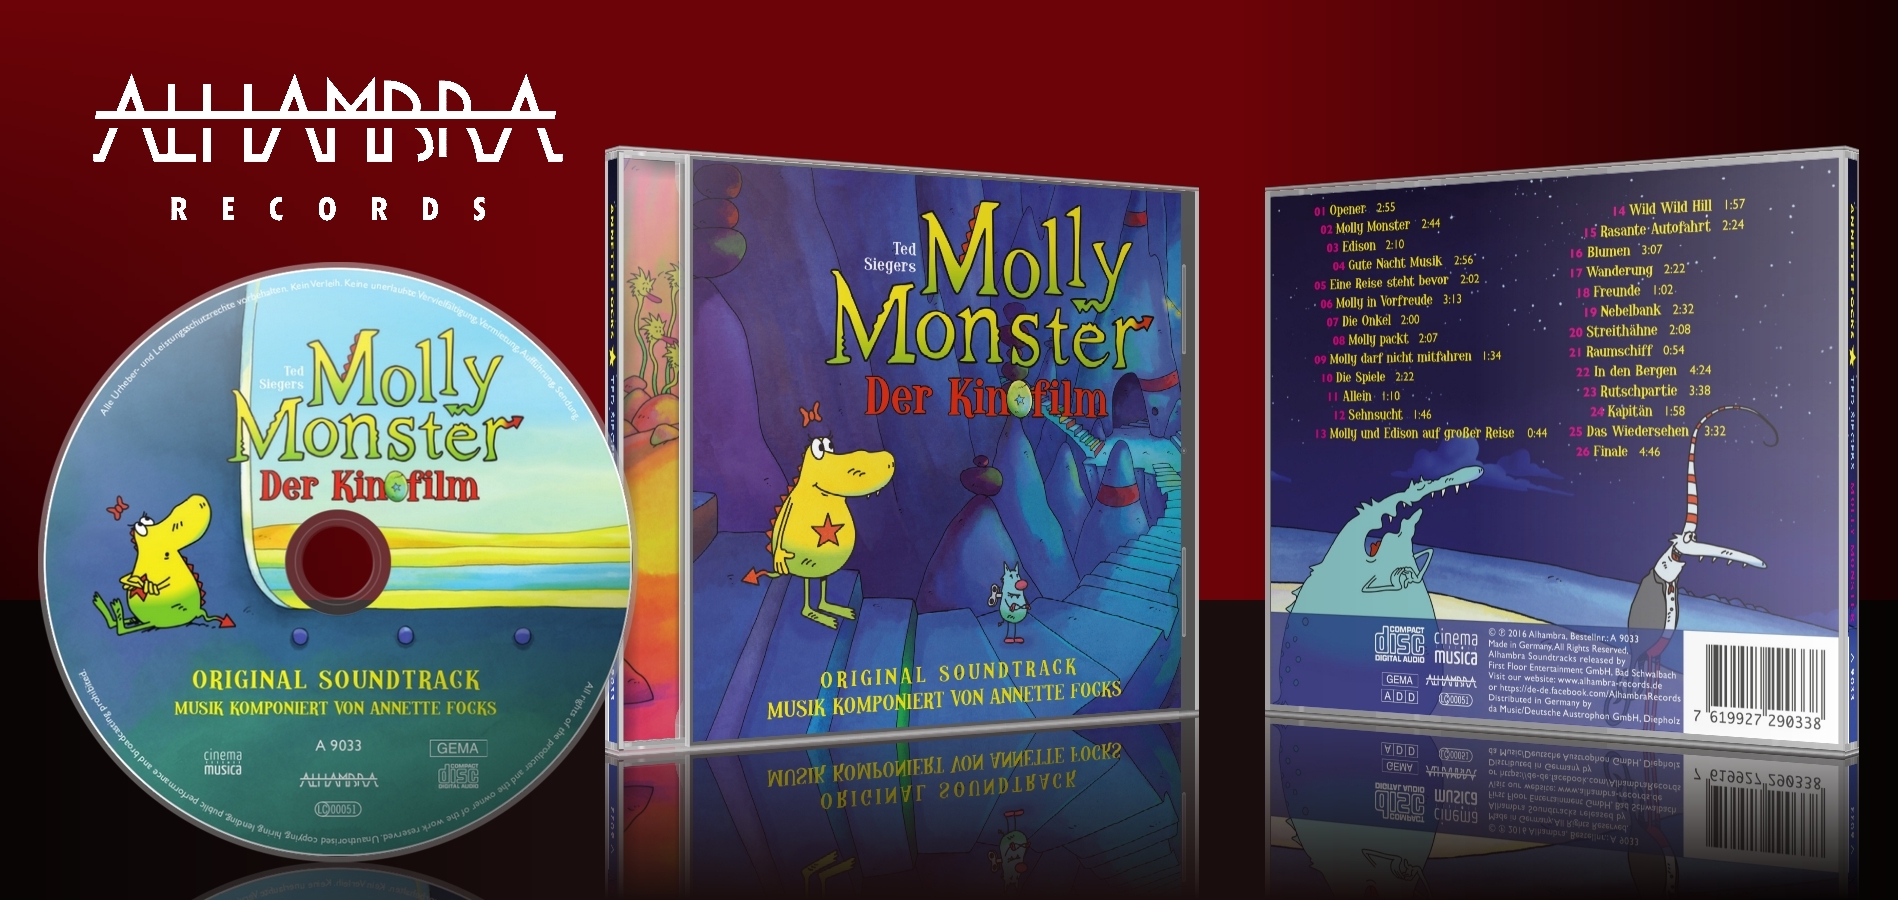 A-9033-Molly-Monster-Score.jpg